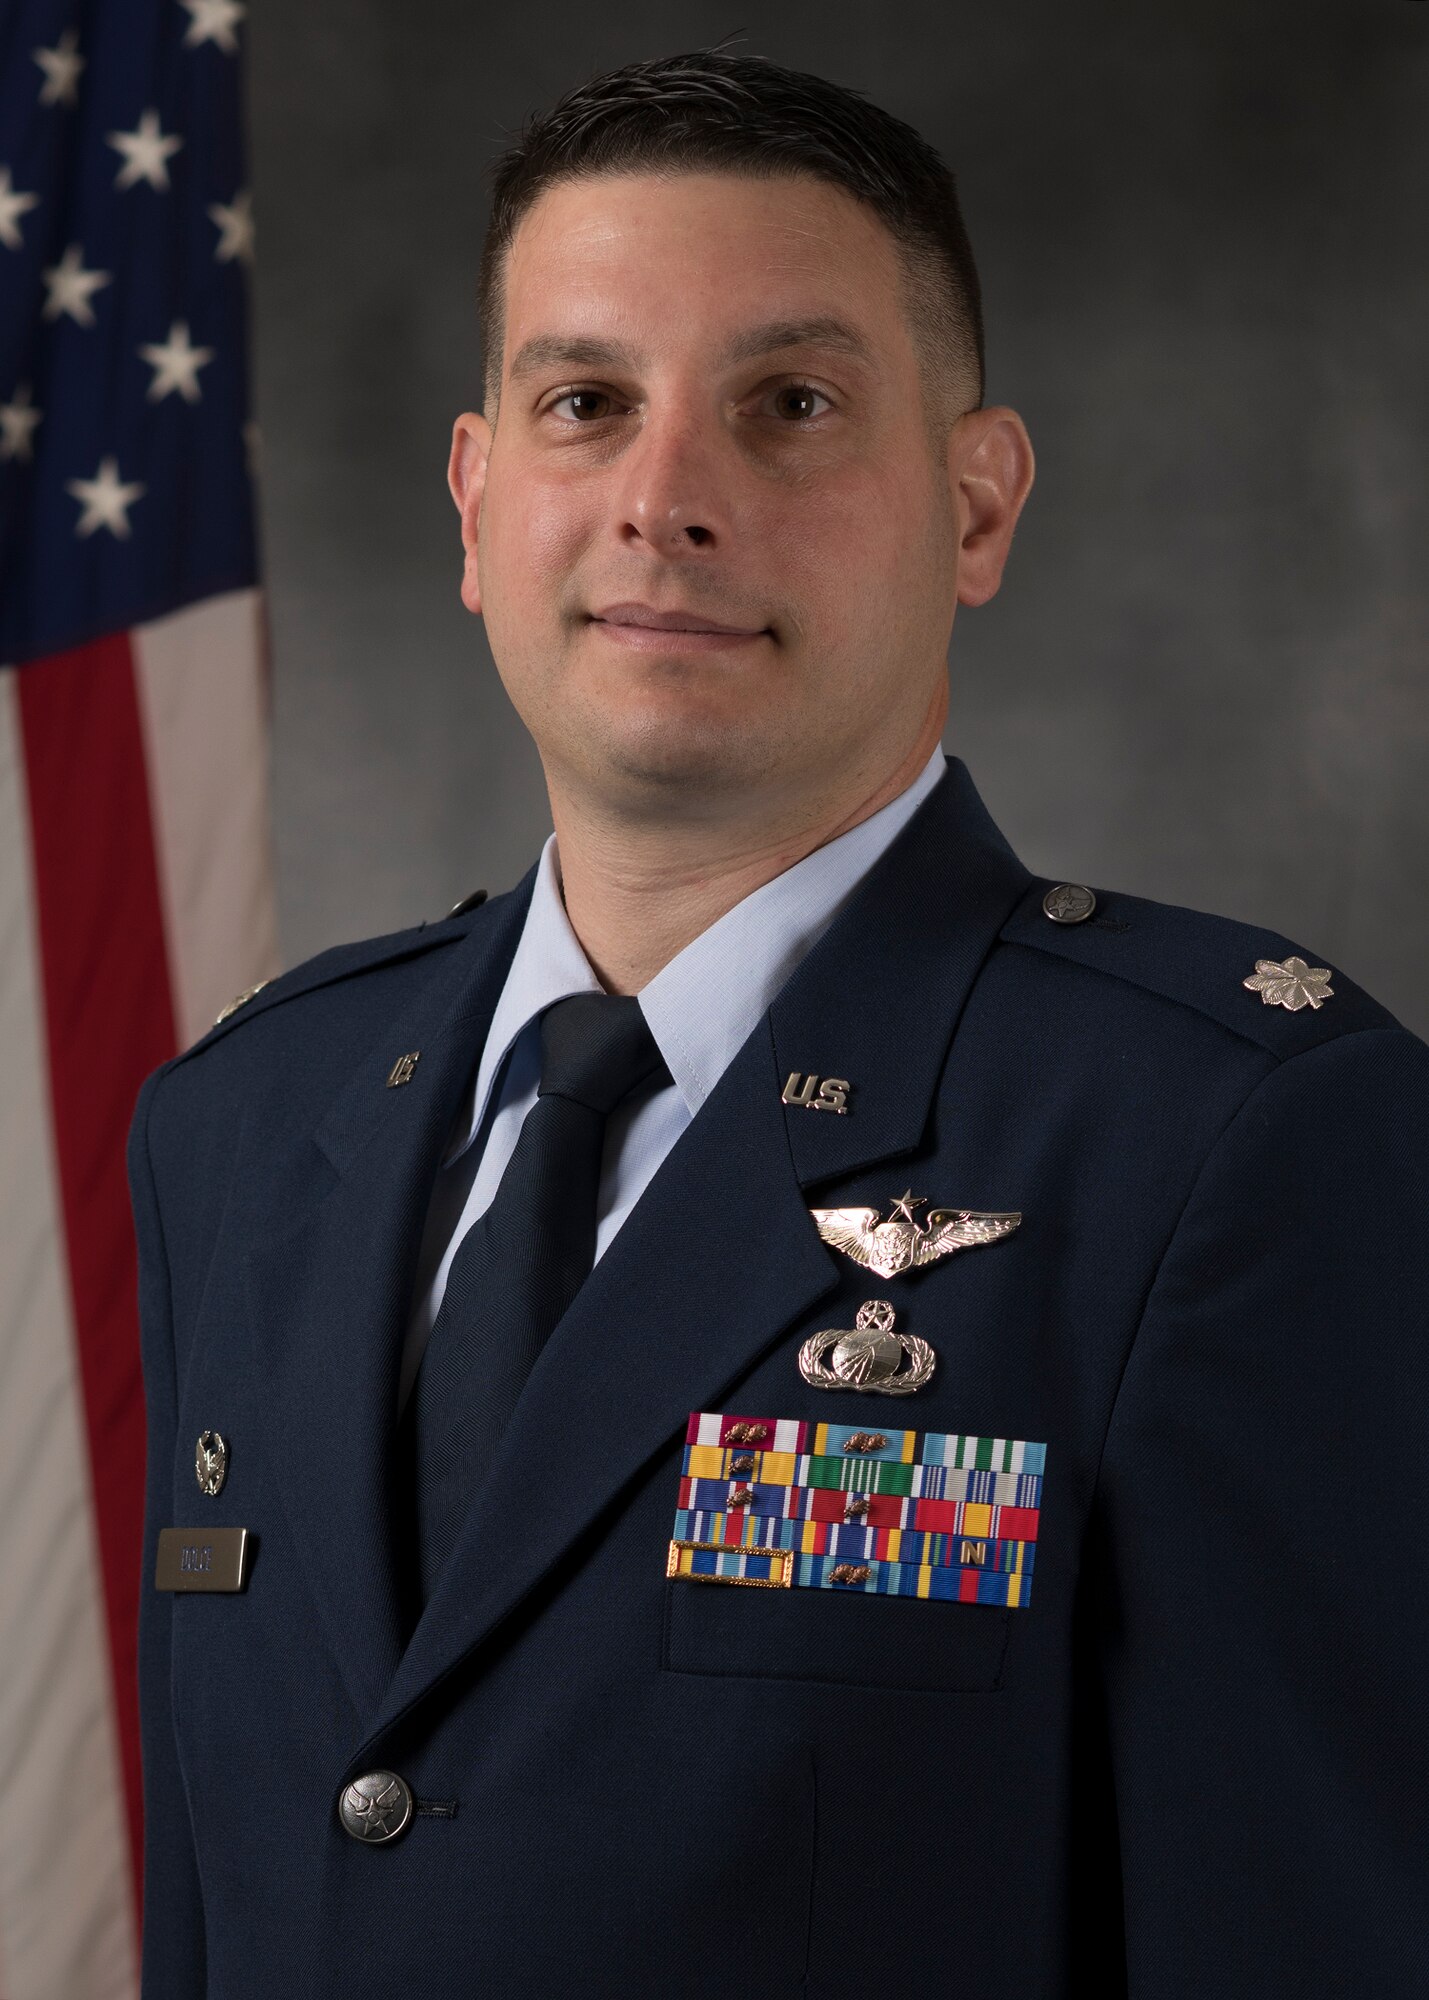 Lt. Col. Paul Dolce